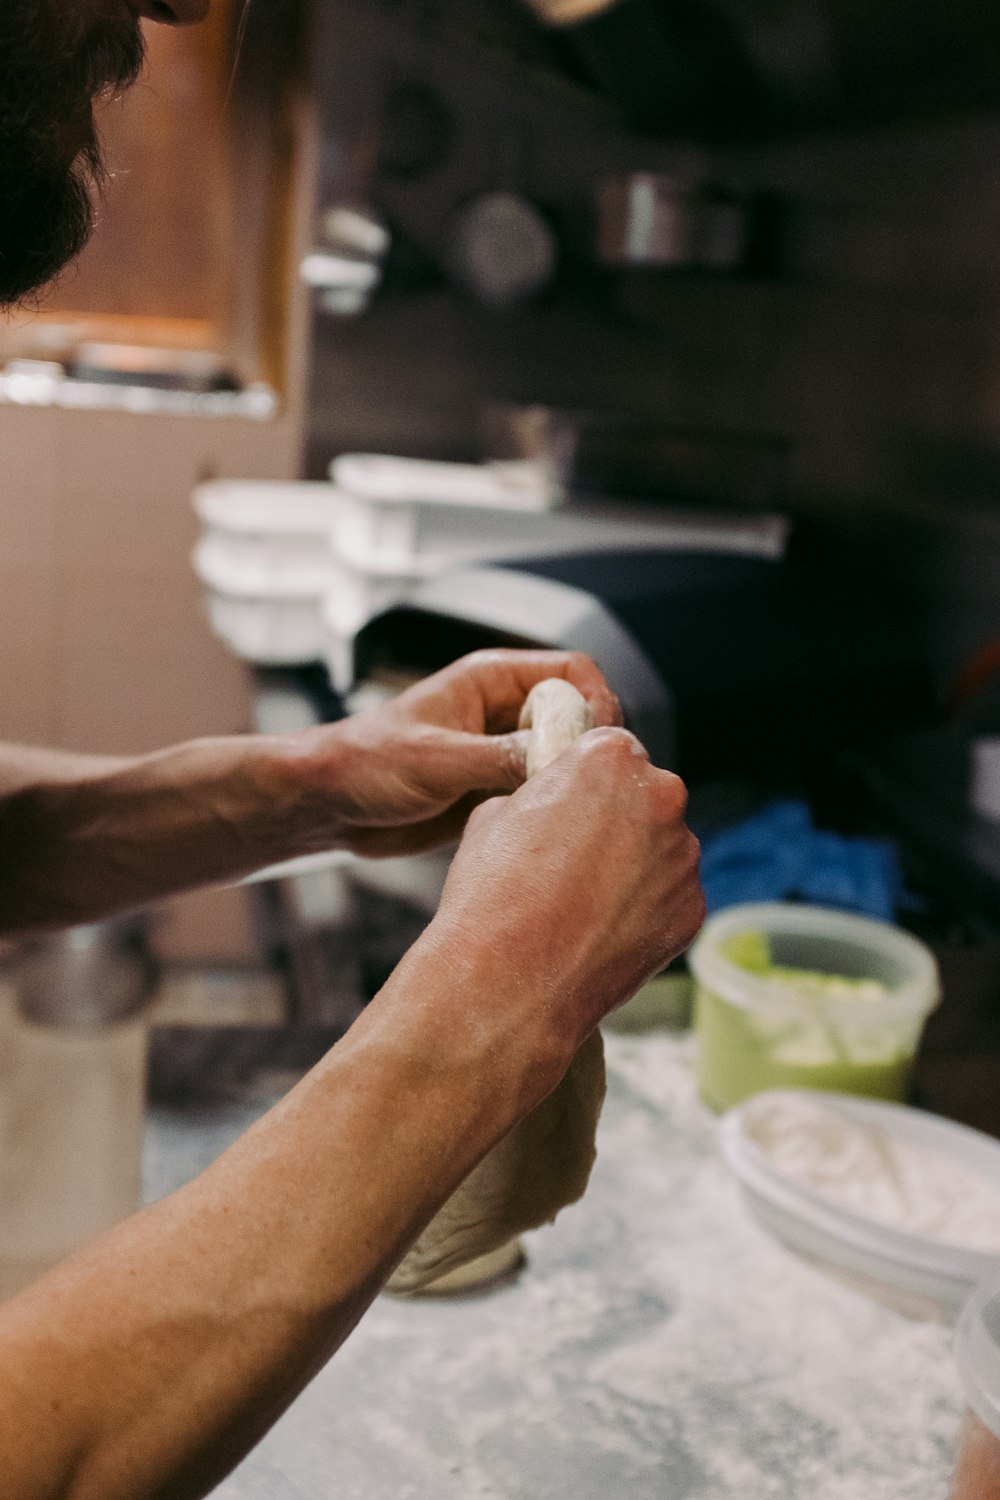 a man is kneading dough into a bowl